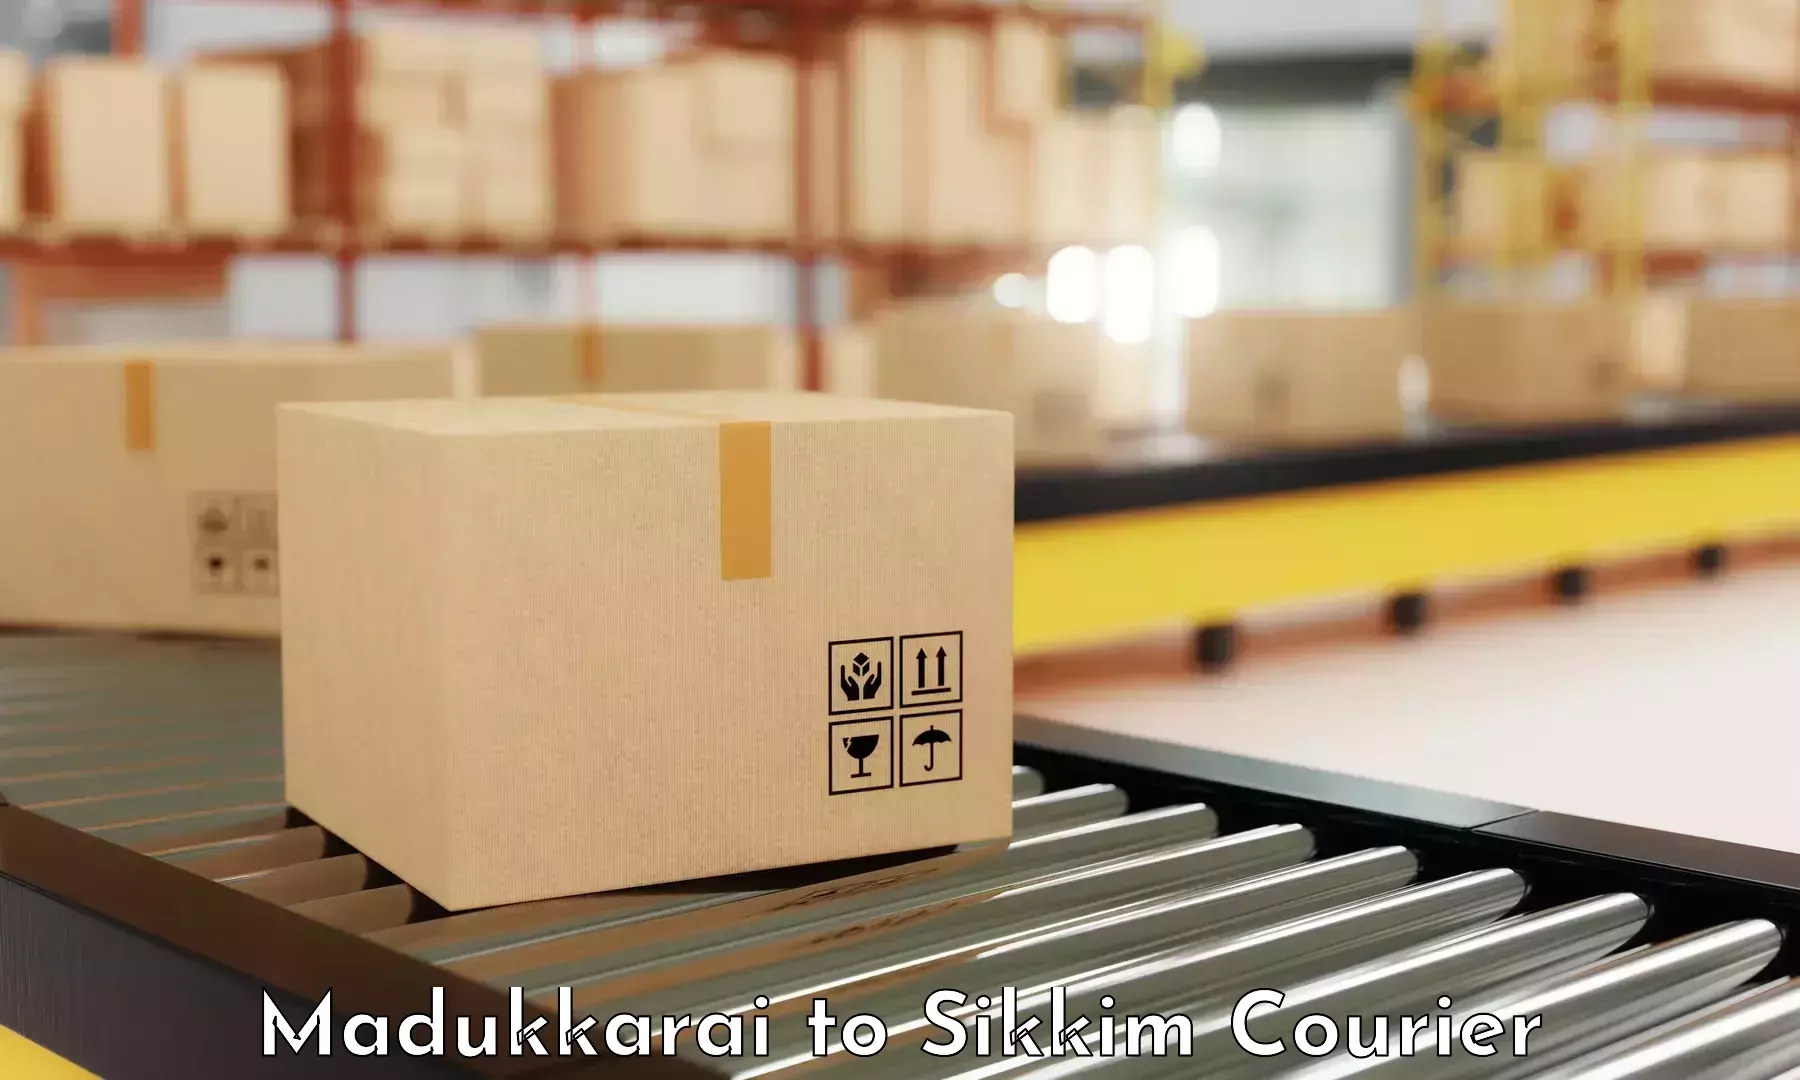 High-speed parcel service Madukkarai to North Sikkim